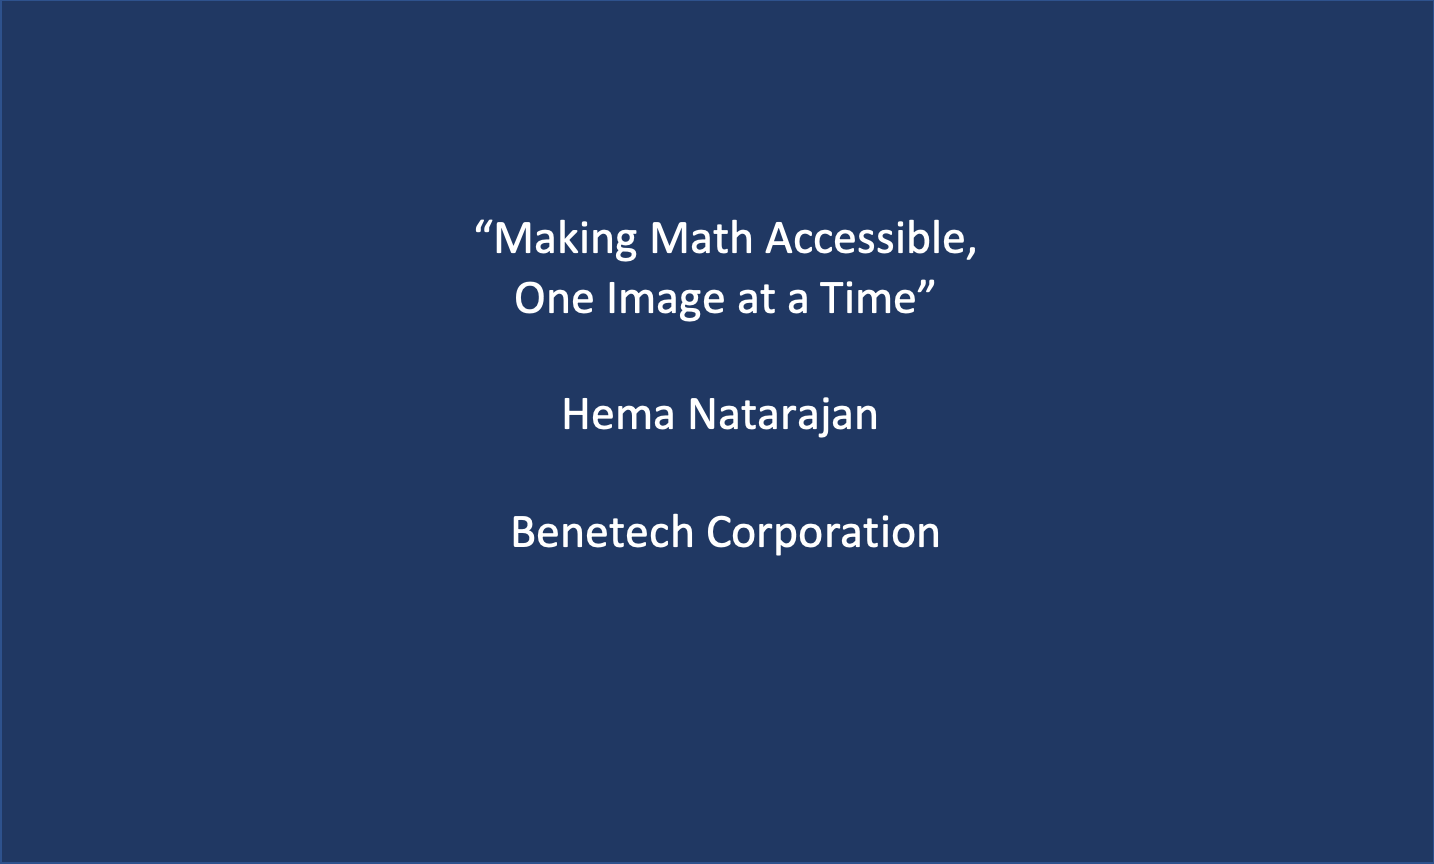 Workshop 5: Heme Natarajan, ‘Making Math Accessible, One Image at a Time’